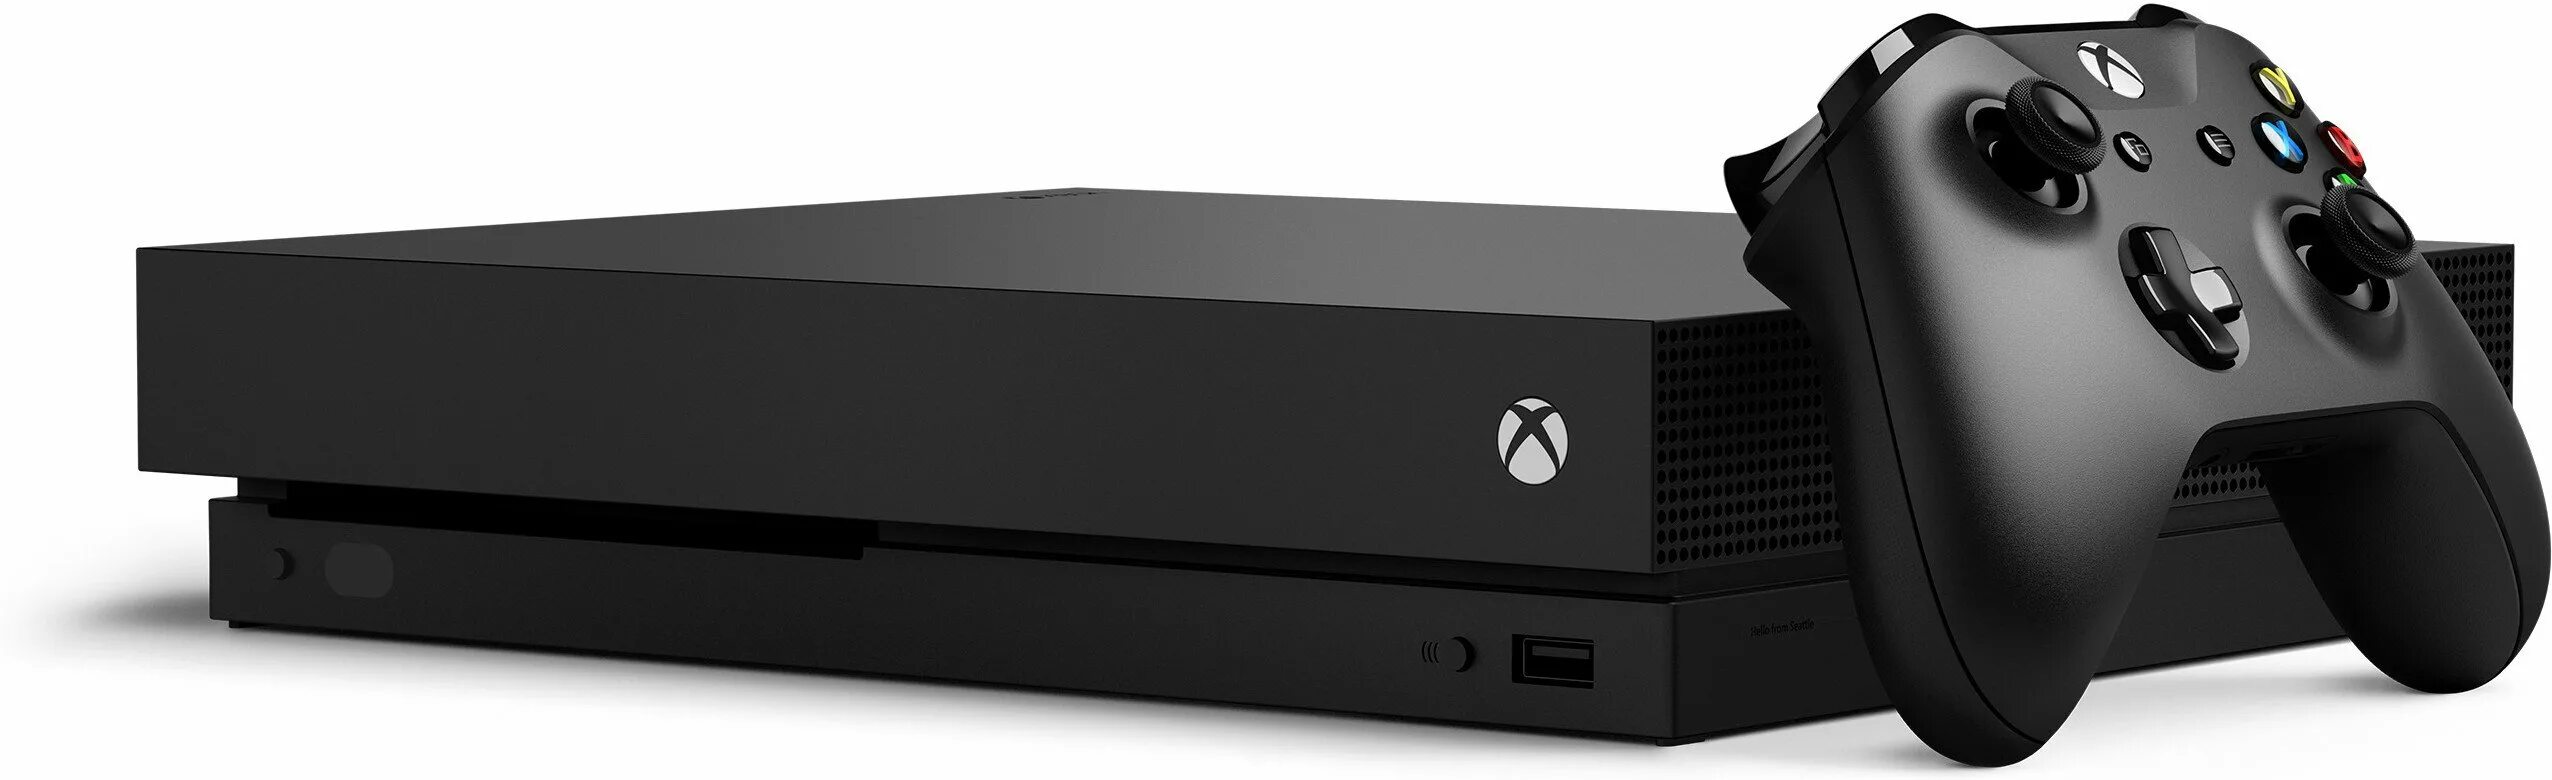 Xbox s черный. Игровая приставка Microsoft Xbox one x. Xbox one s. Xbox one s 1tb all Digital Edition. Xbox one 2013.